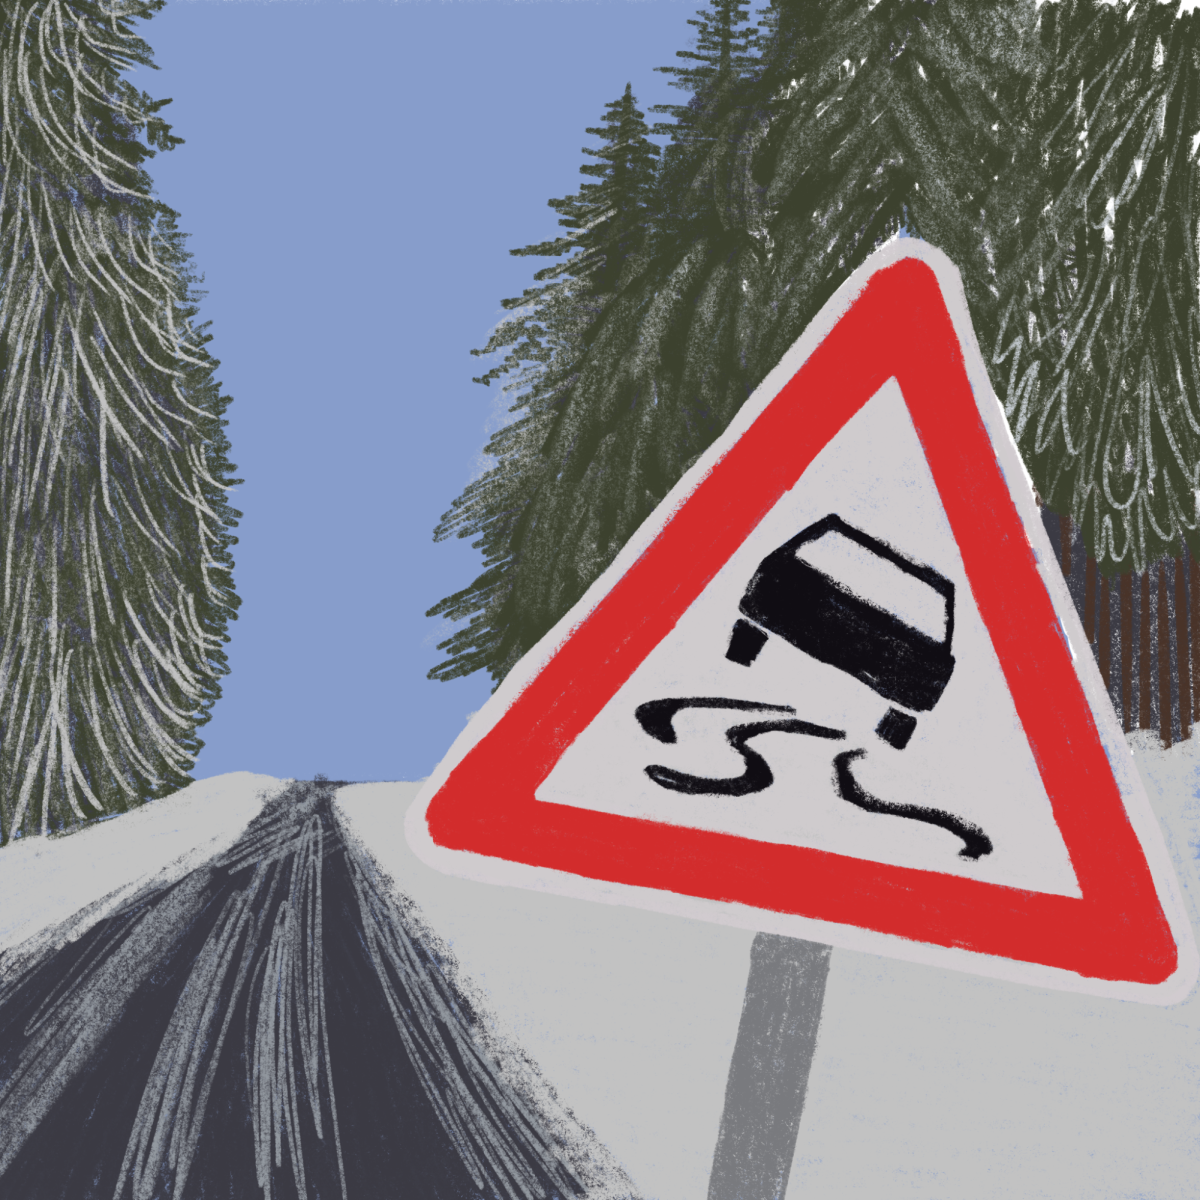 OPINION: Snow driving etiquette 101